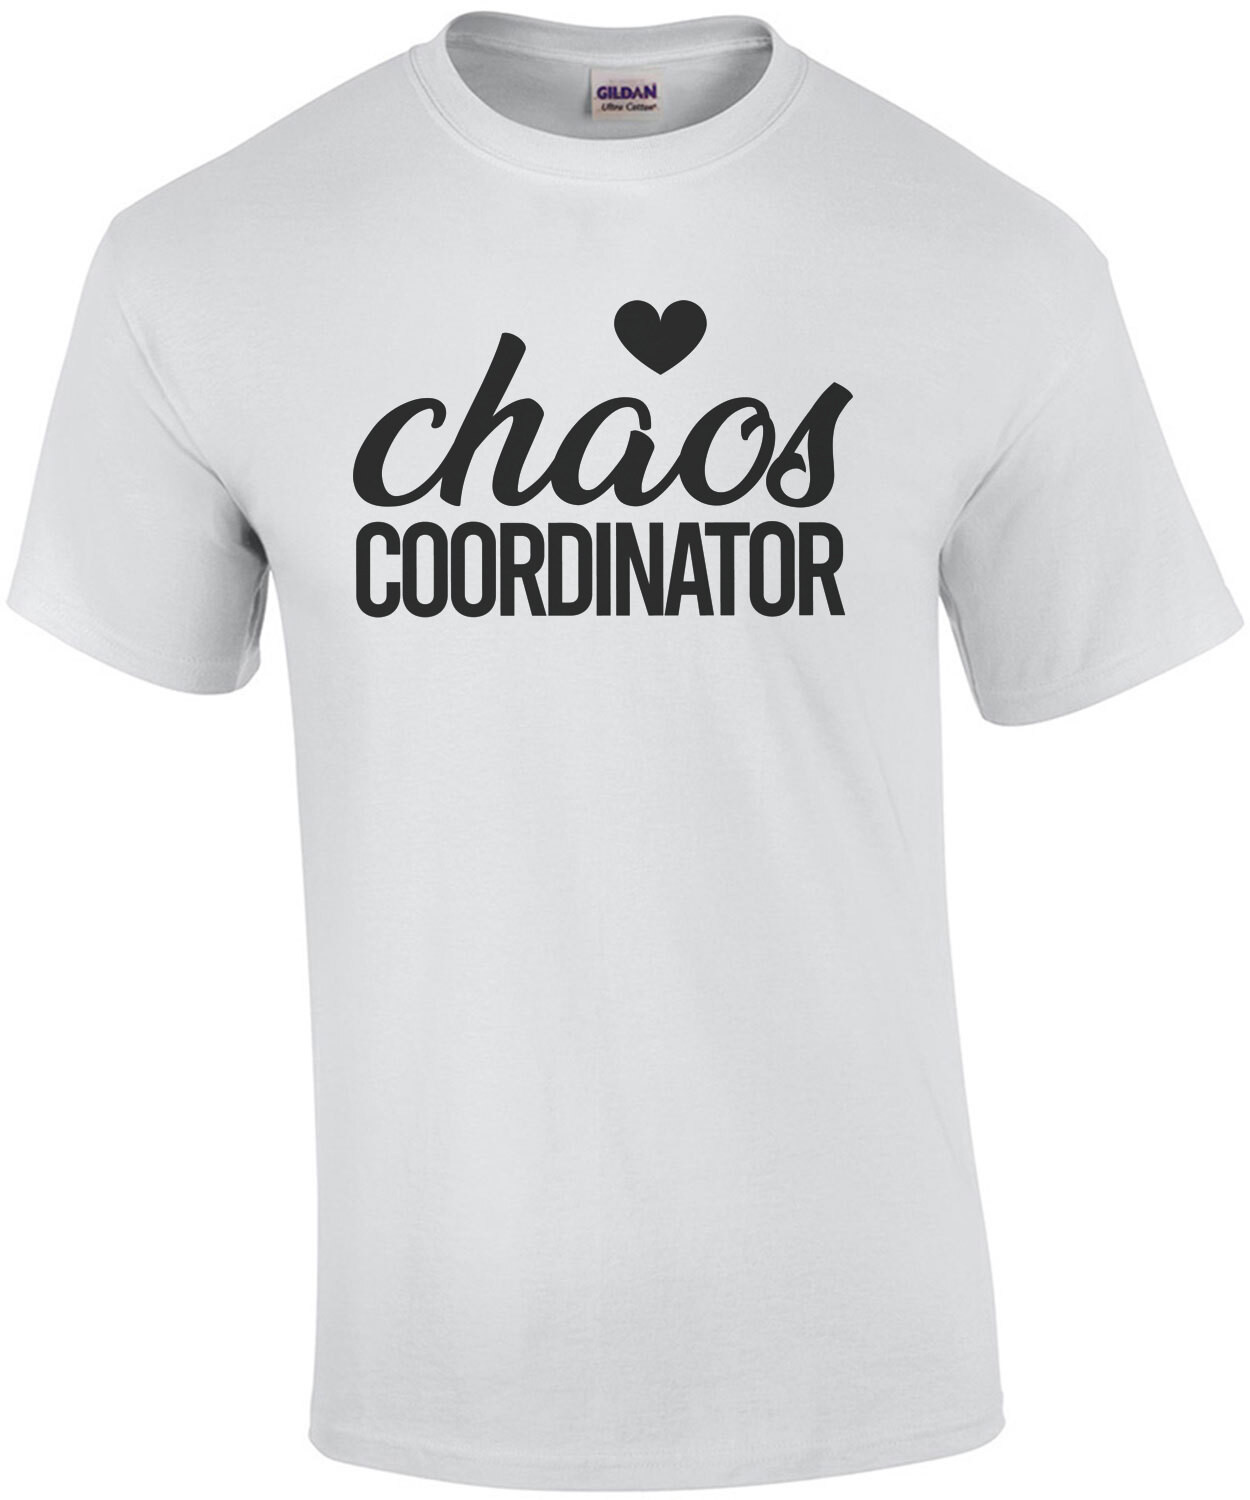 Chaos Coordinator - funny t-shirt